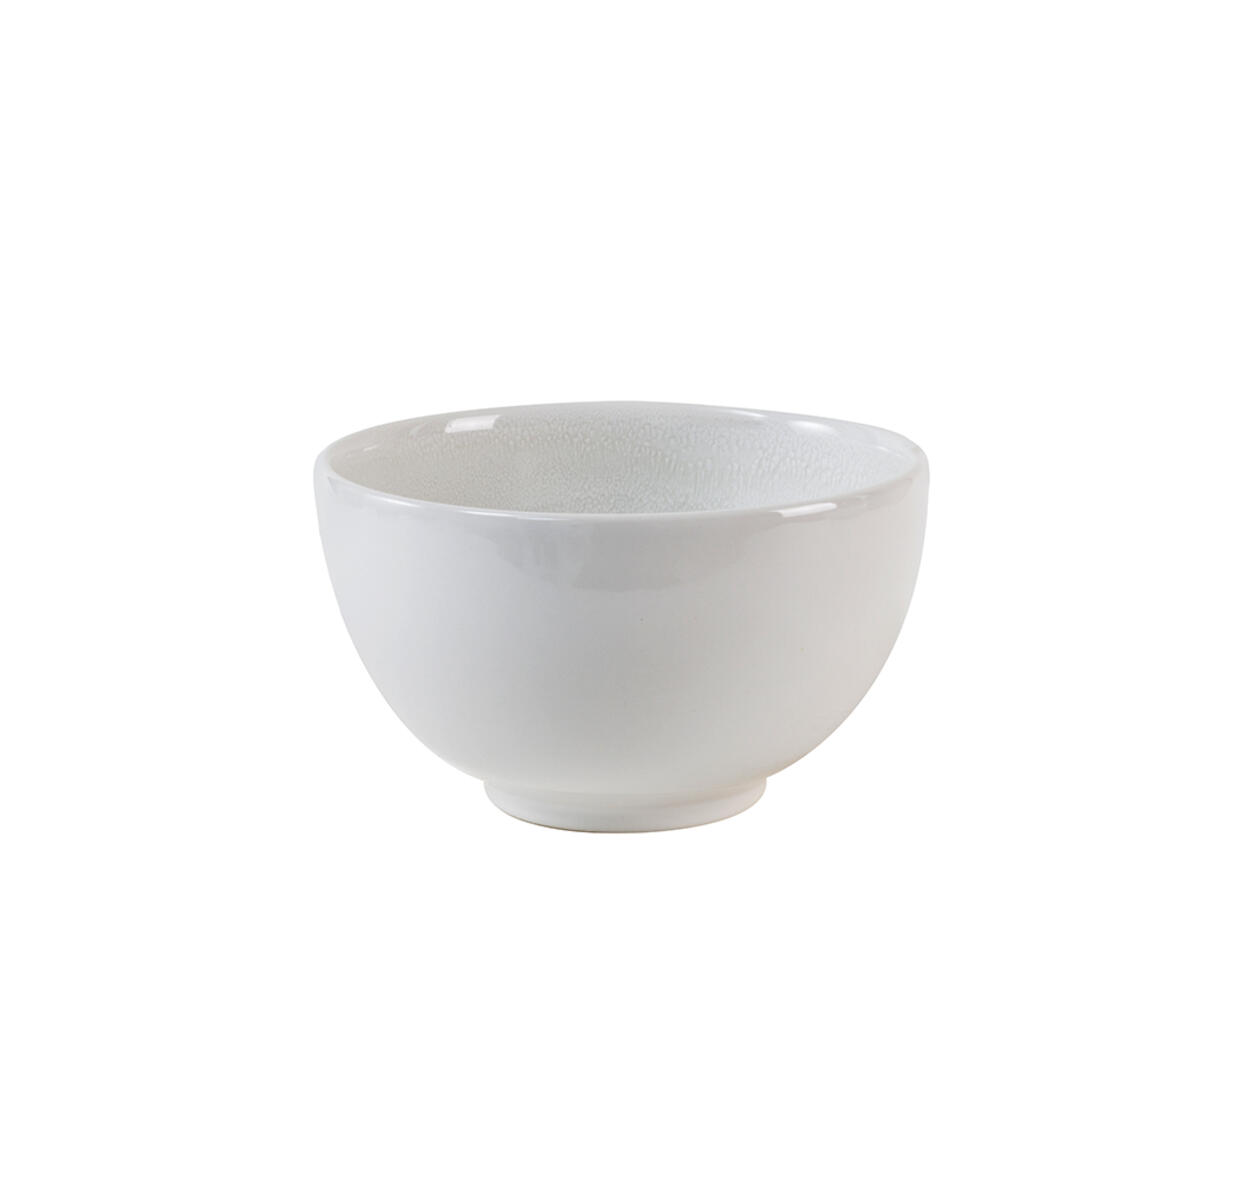 bowl l tourron neige ceramic manufacturer